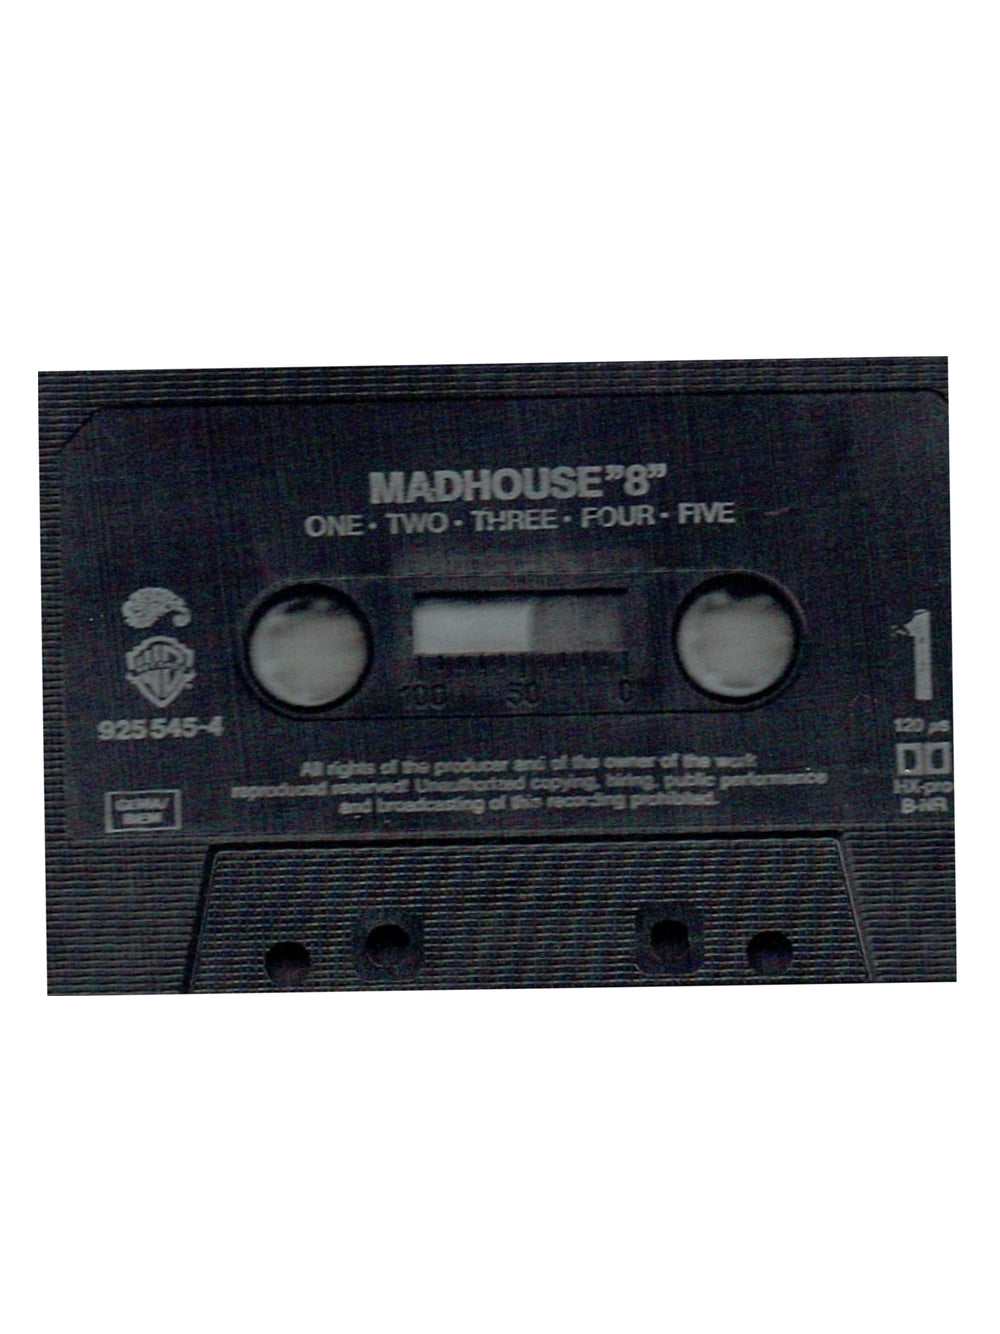 Prince – Madhouse 8 Tape Original Tape Cassette 8 Tracks EU / UK Release 1987 Prince